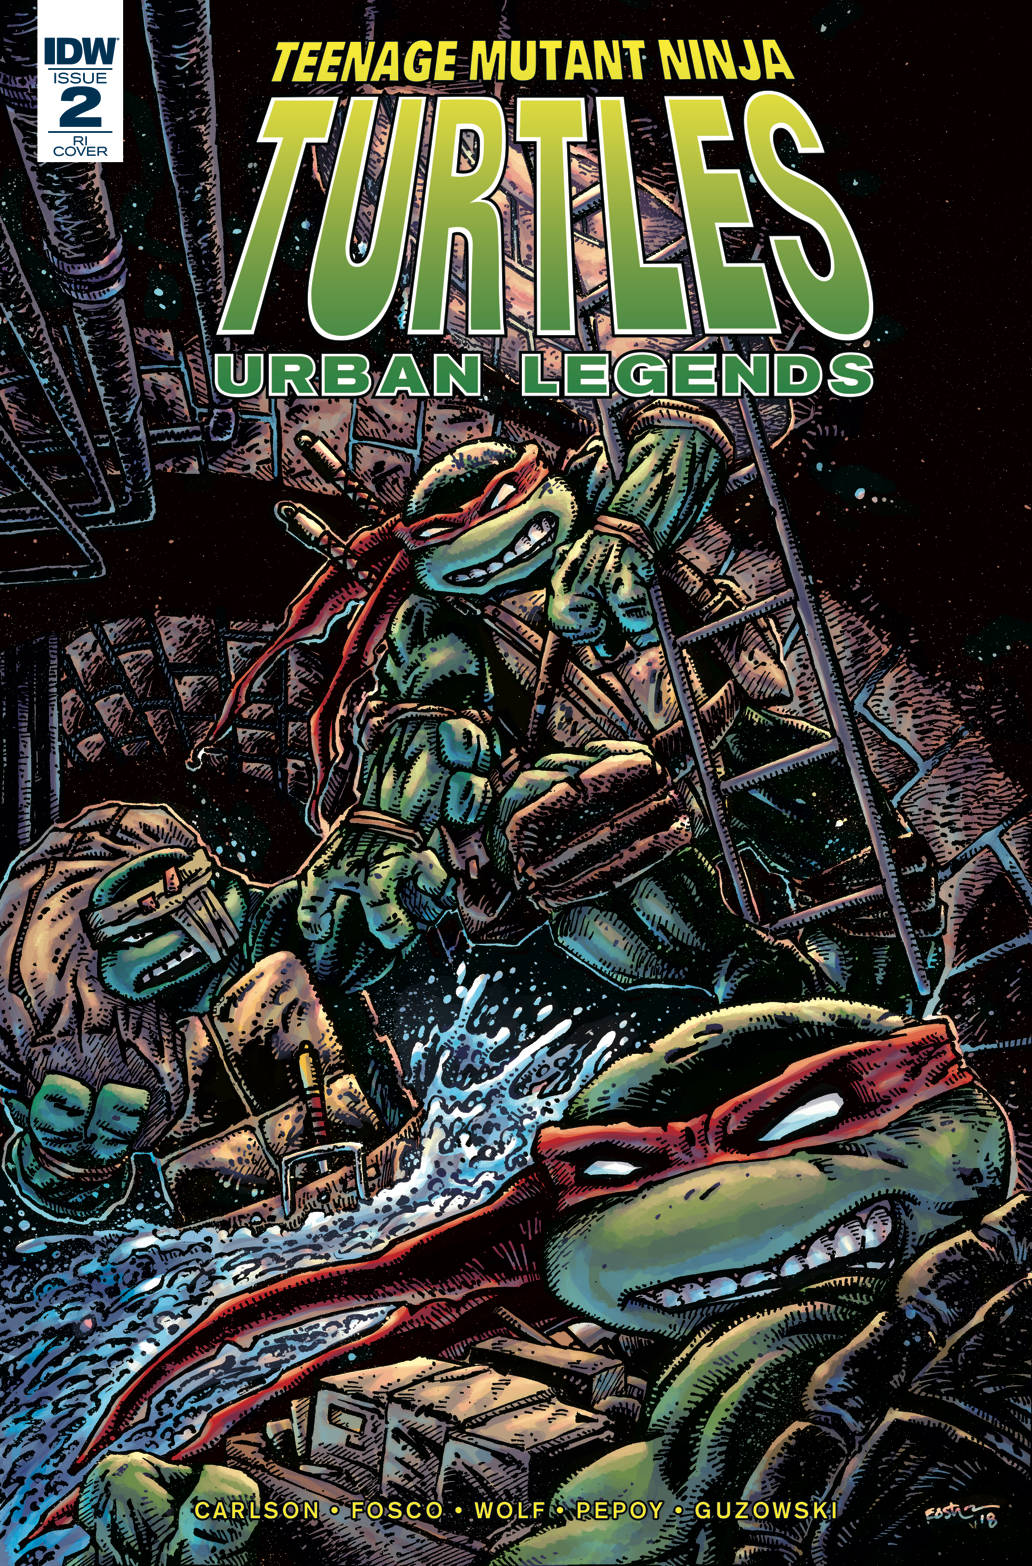 Teenage Mutant Ninja Turtles Urban Legends #2 1 for 10 Incentive